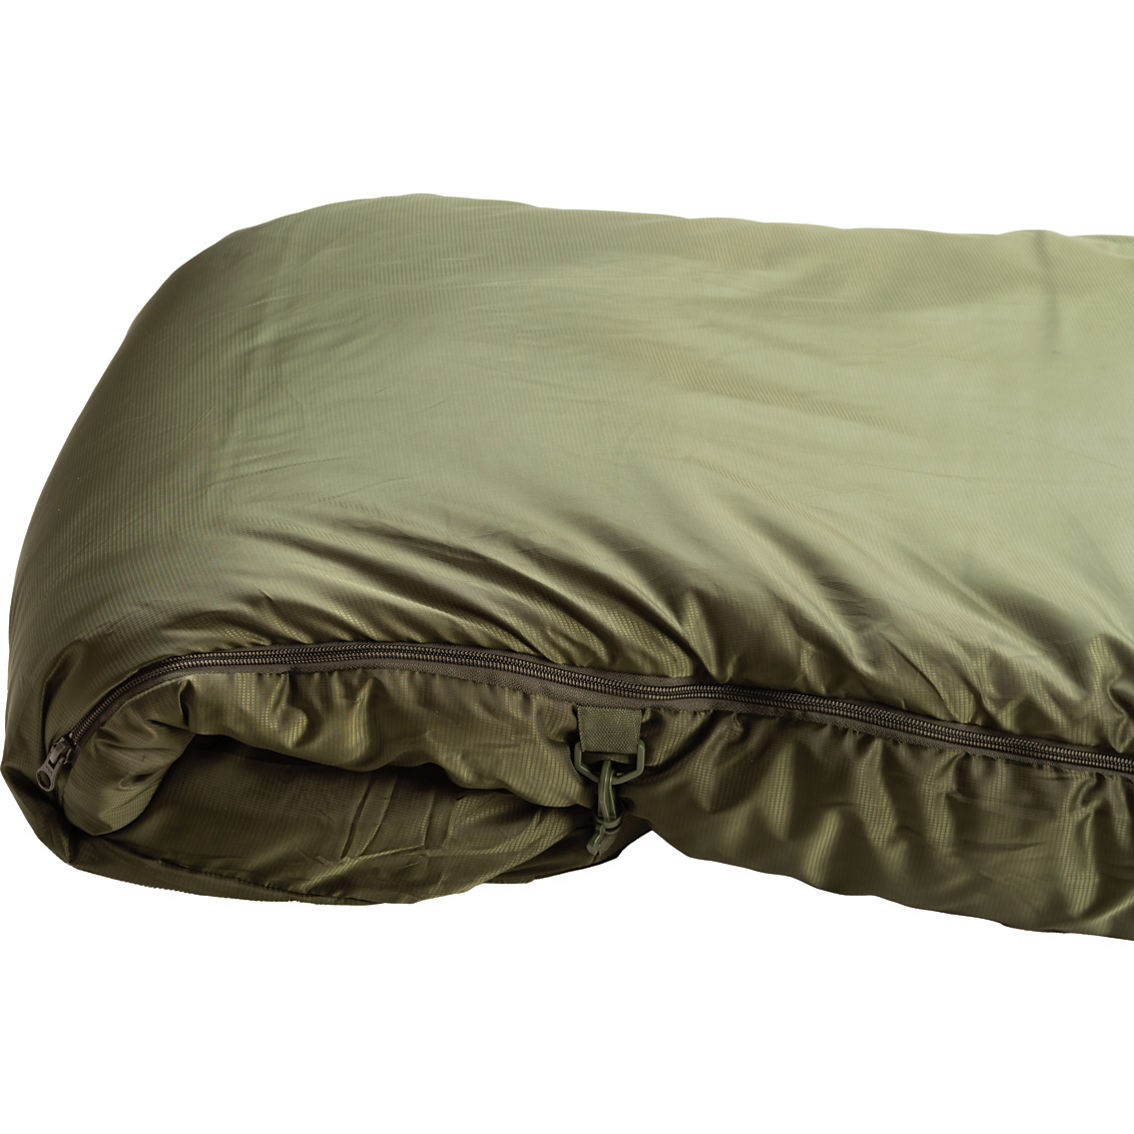 SnugPak Softie Elite 3 Right Zip Sleeping Bag - Image 4 of 5